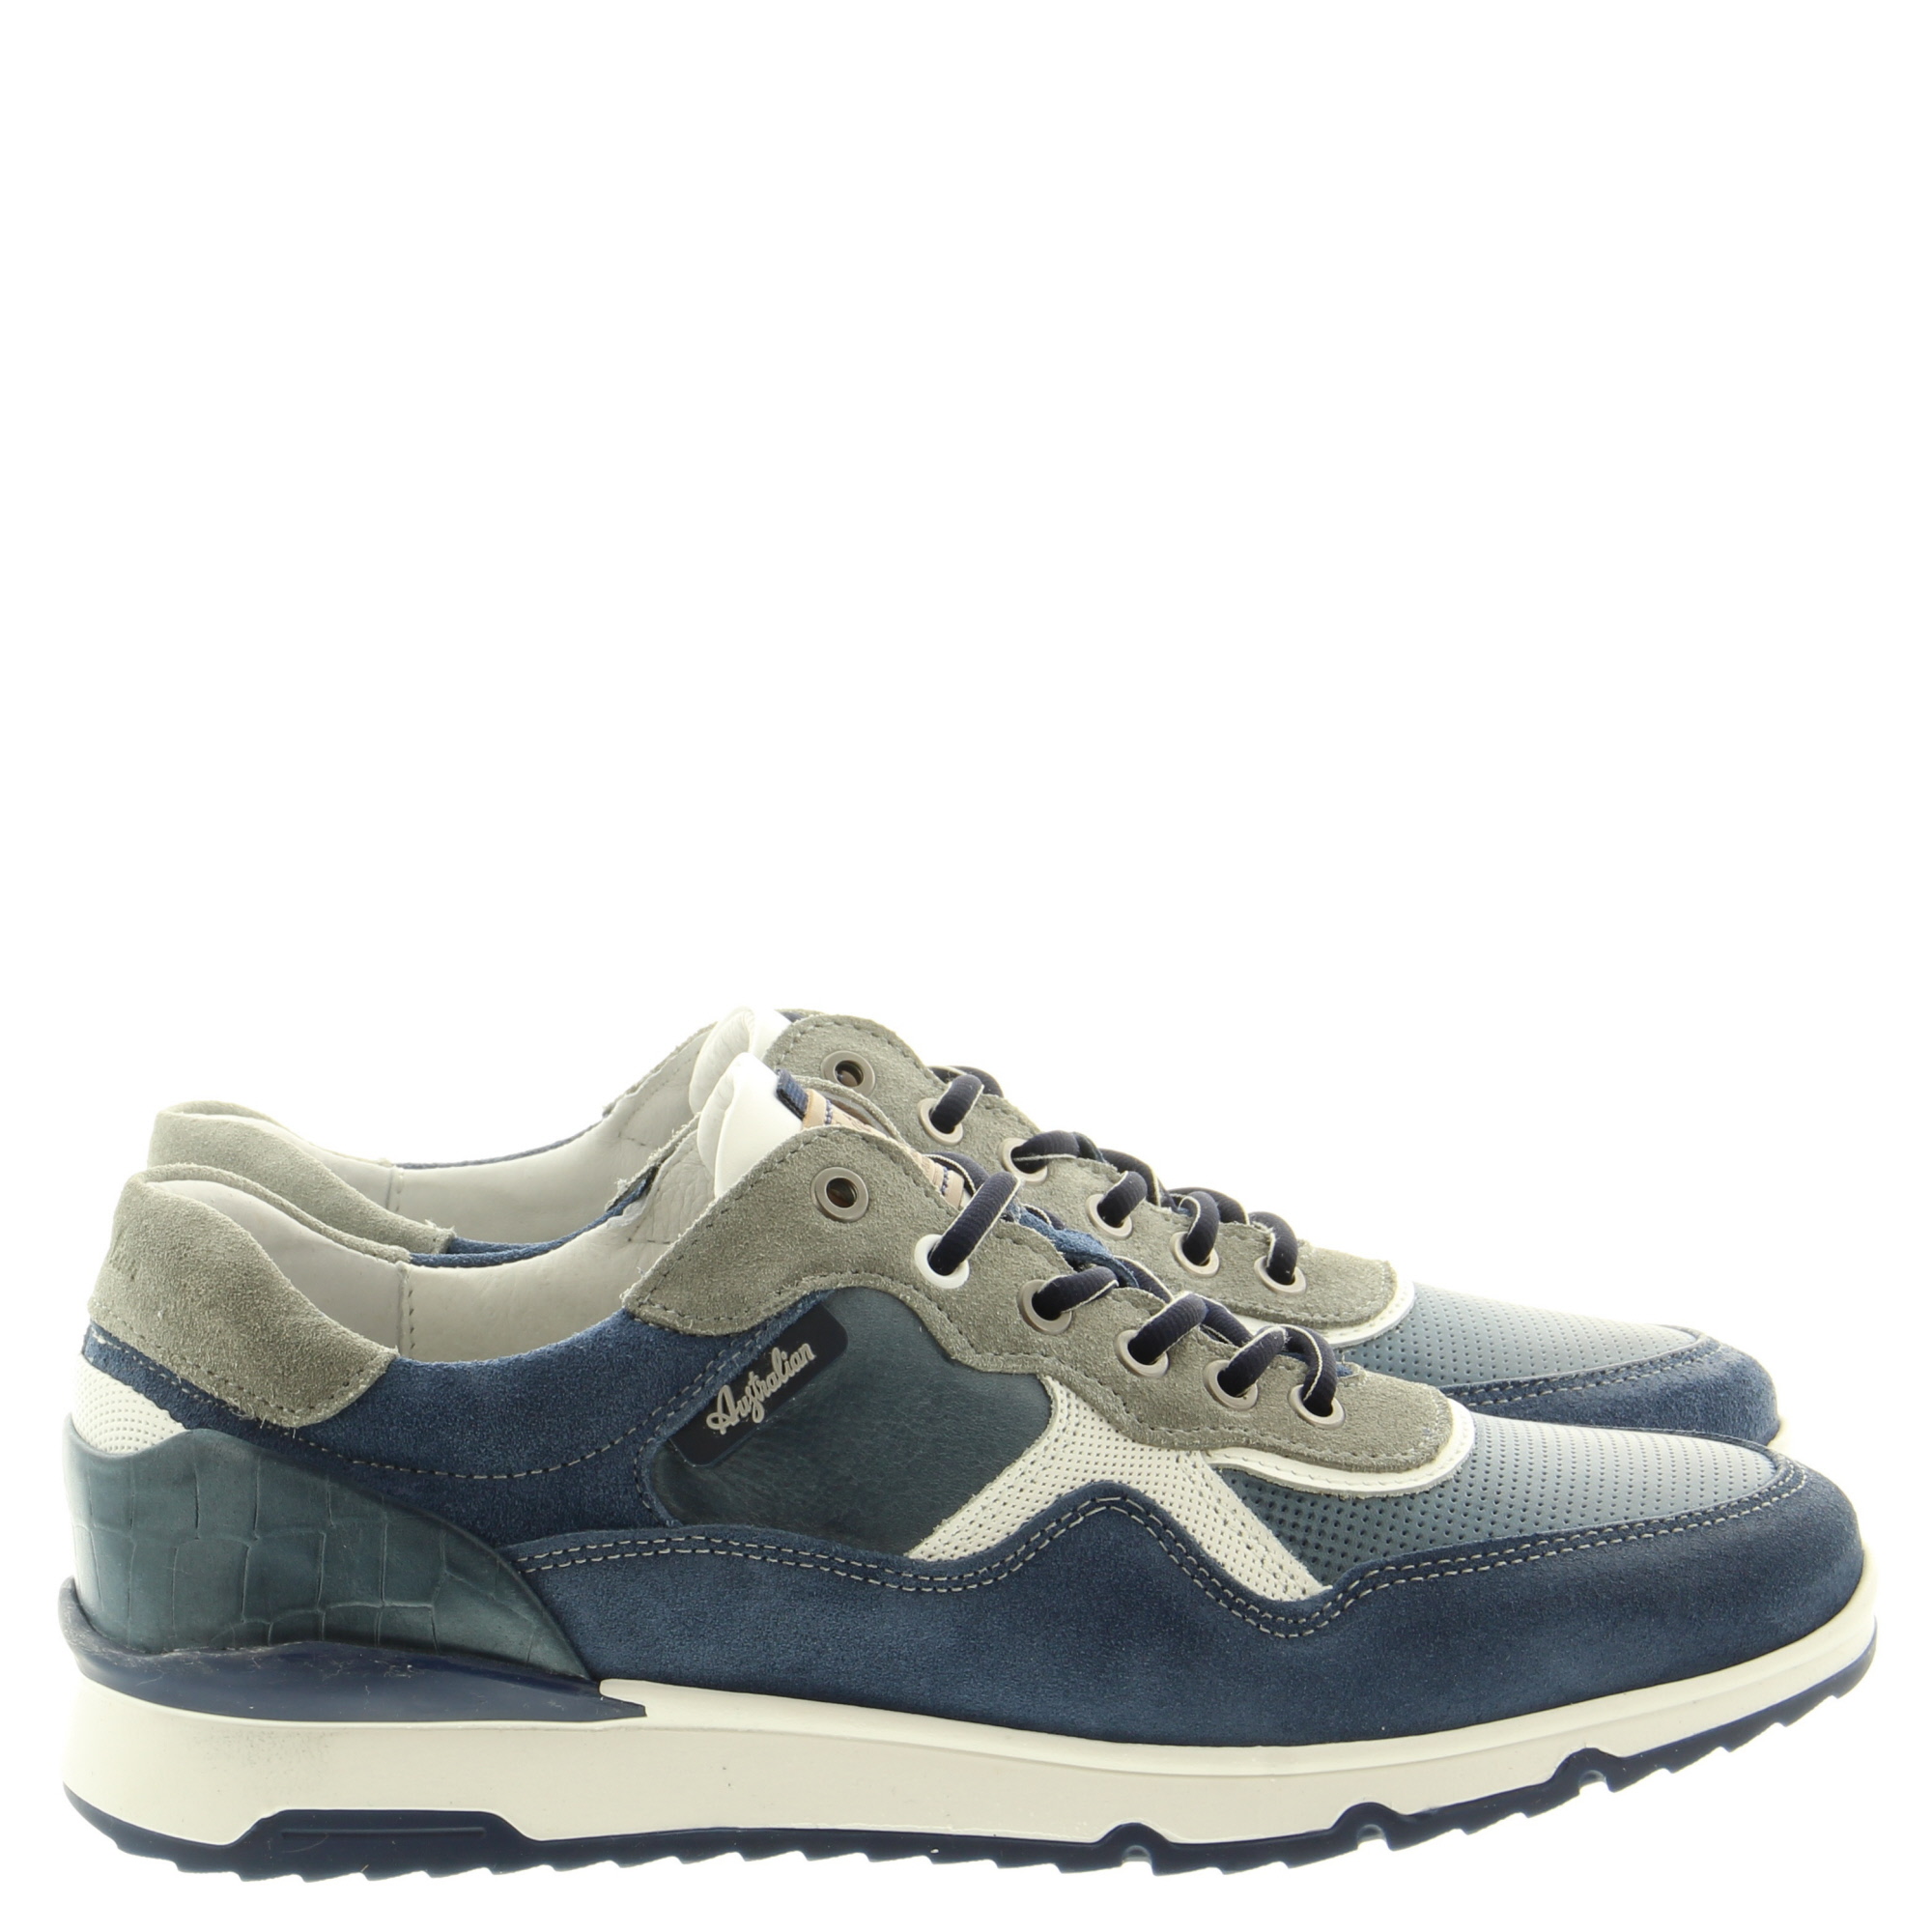 Australian Footwear Mazoni 15.1519.01 SI7 Blue grey white